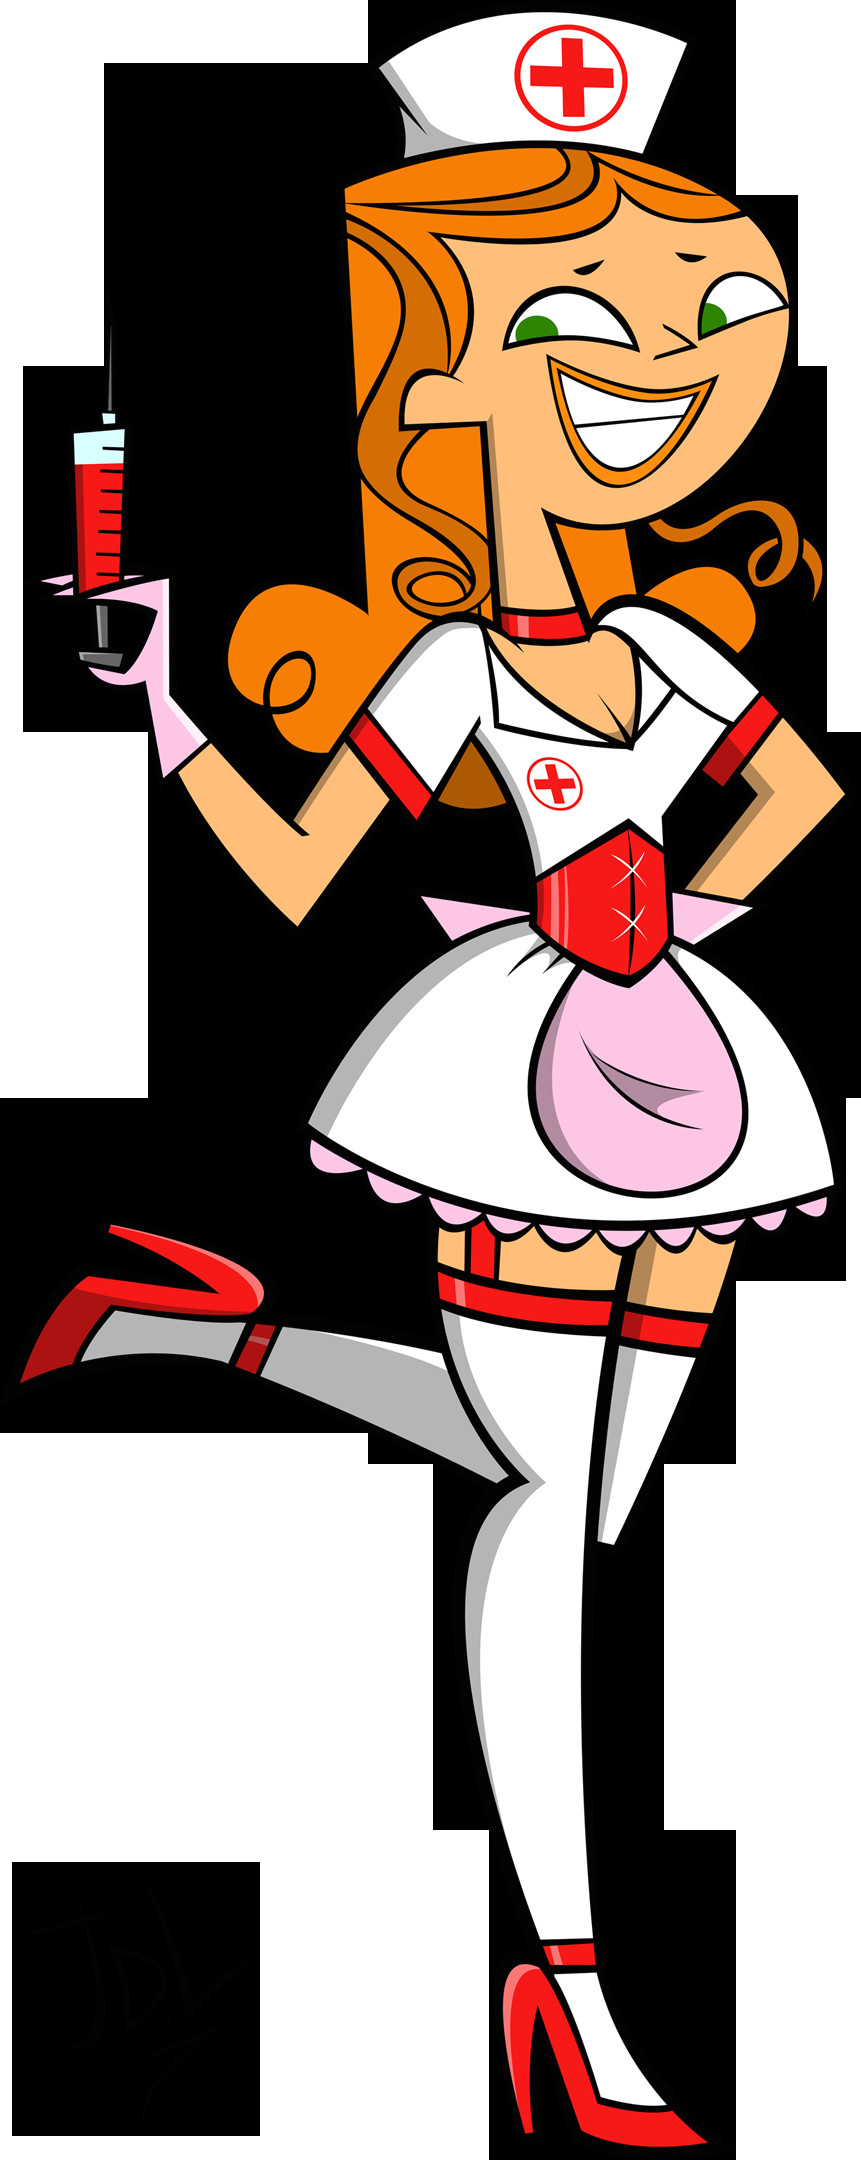 Drawing A Cartoon Nurse Free Nurse Cartoon Image Download Free Clip Art Free Clip Art On